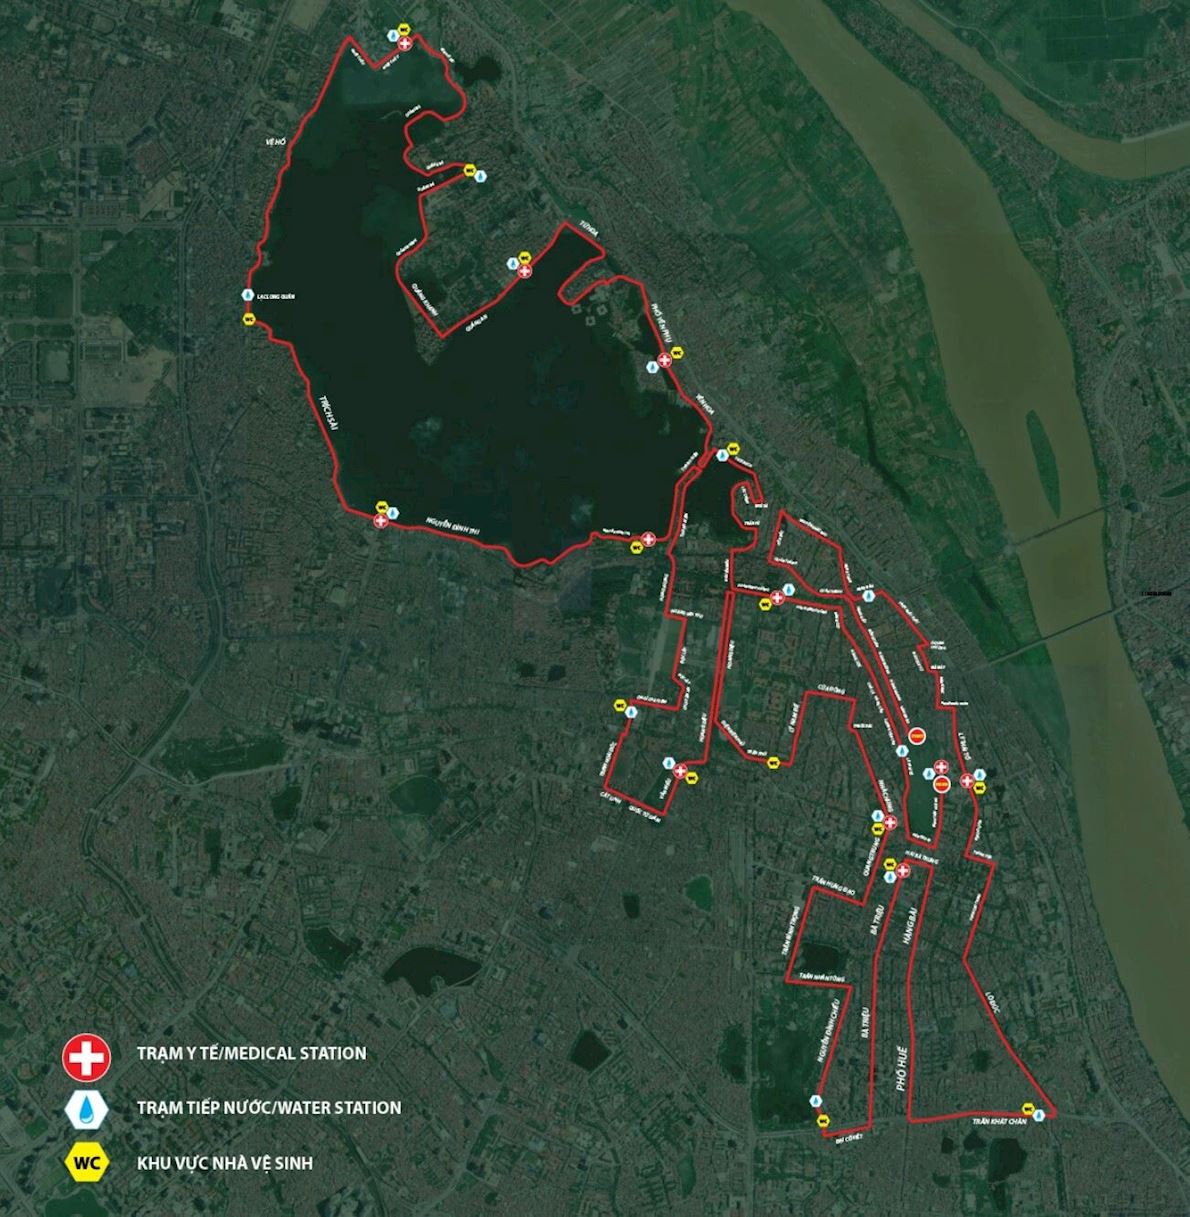 VPBANK Hanoi Marathon  Mappa del percorso